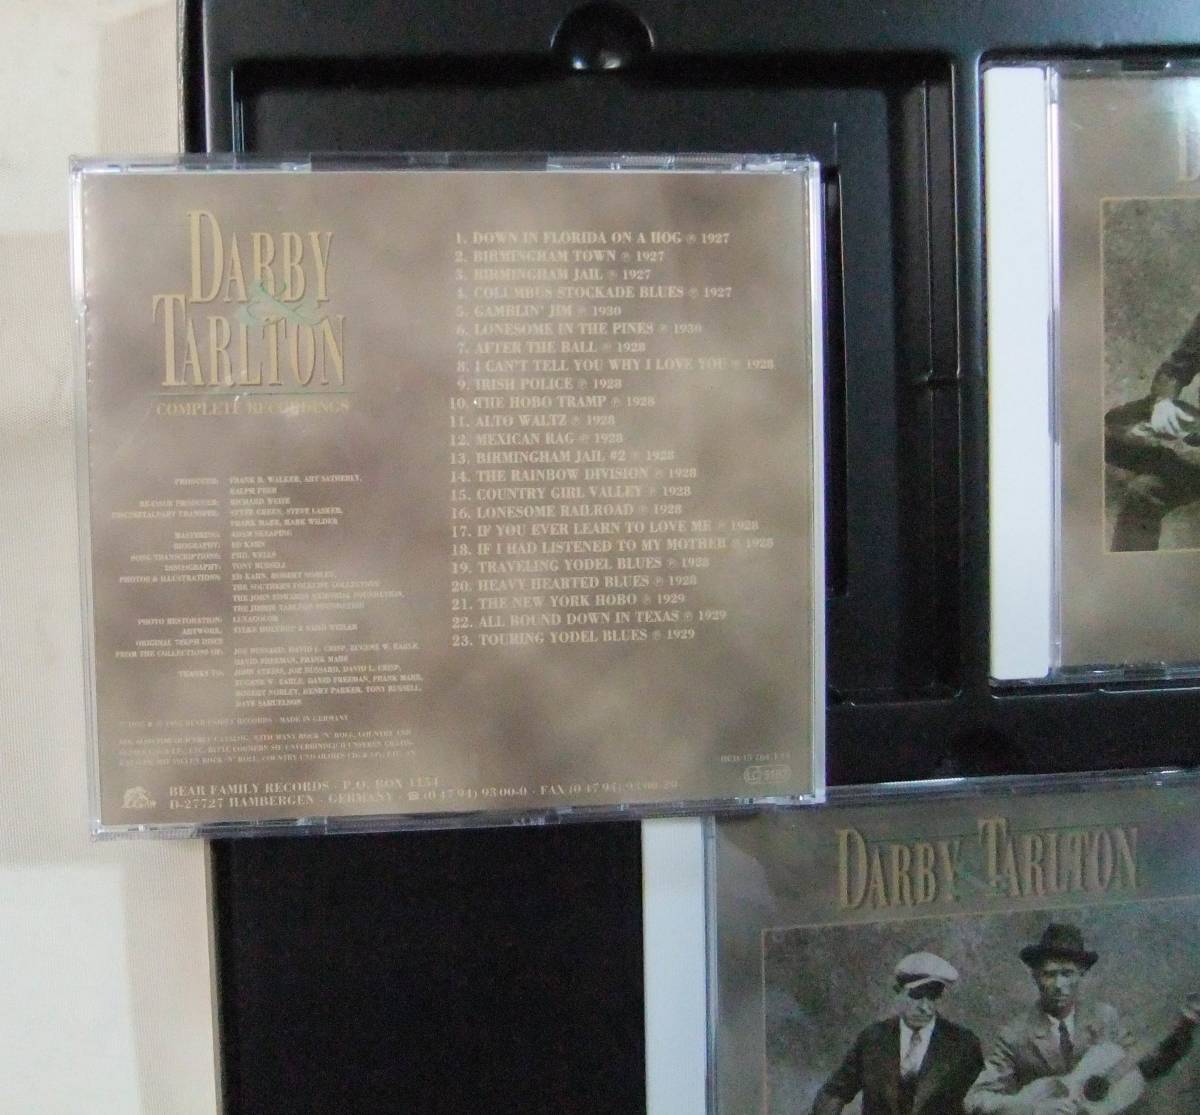 Darby & Tarlton / Complete Recordings / 3CDBOX / '95Germany BearFamily Records / スライドギター / 美品